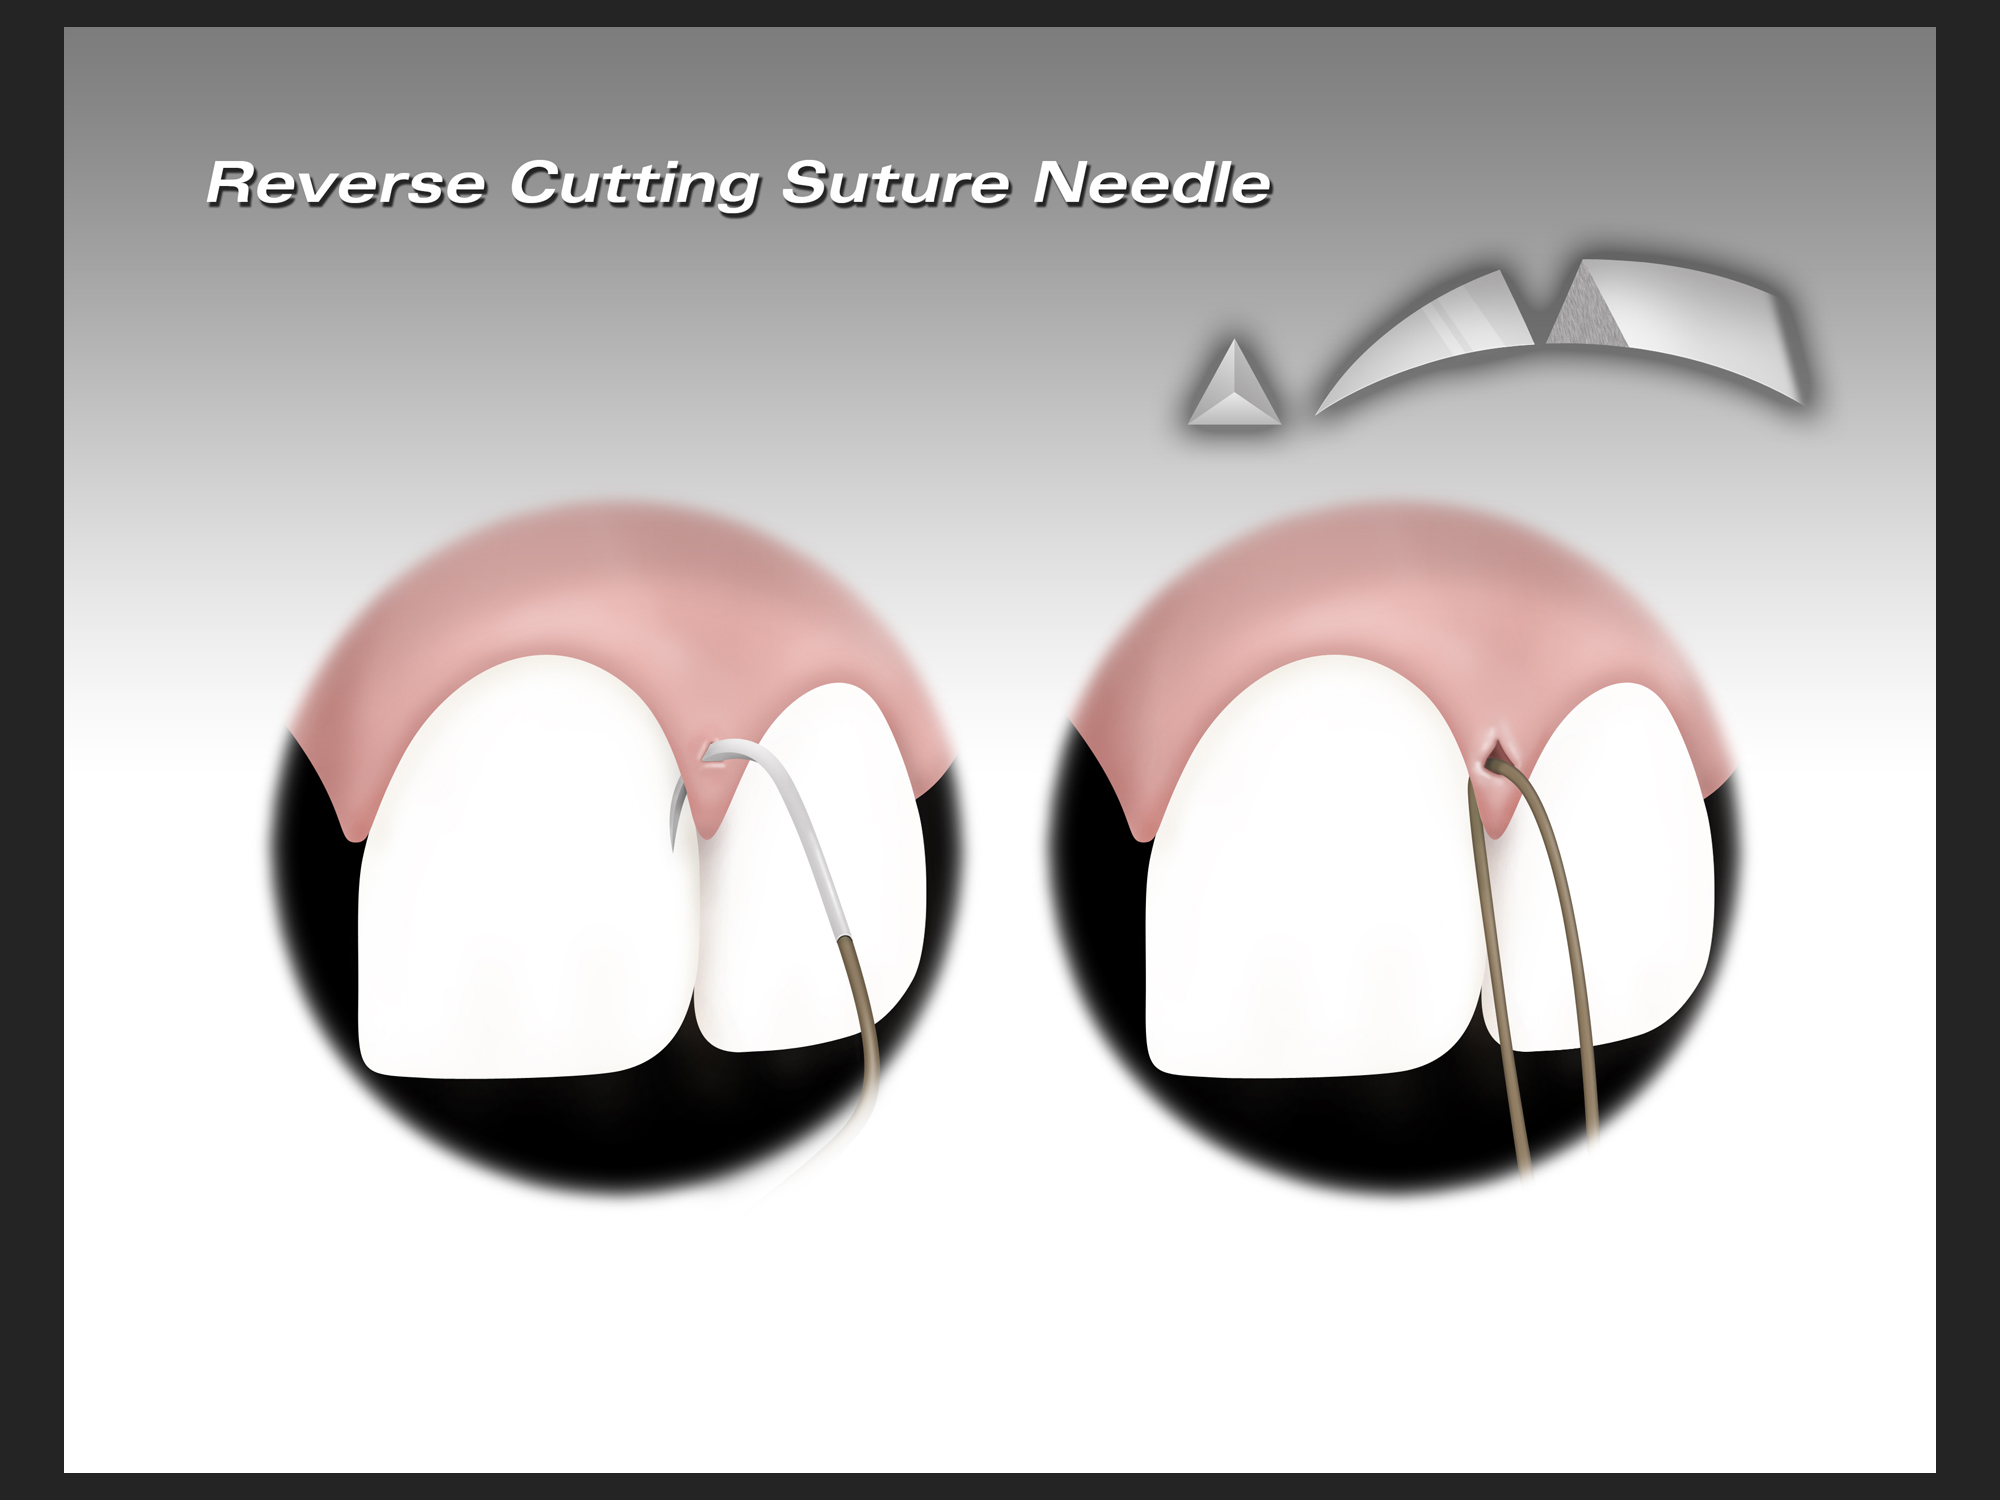 Reverse Cutting Suture Needle, Photoshop illustration for slide, 2013.